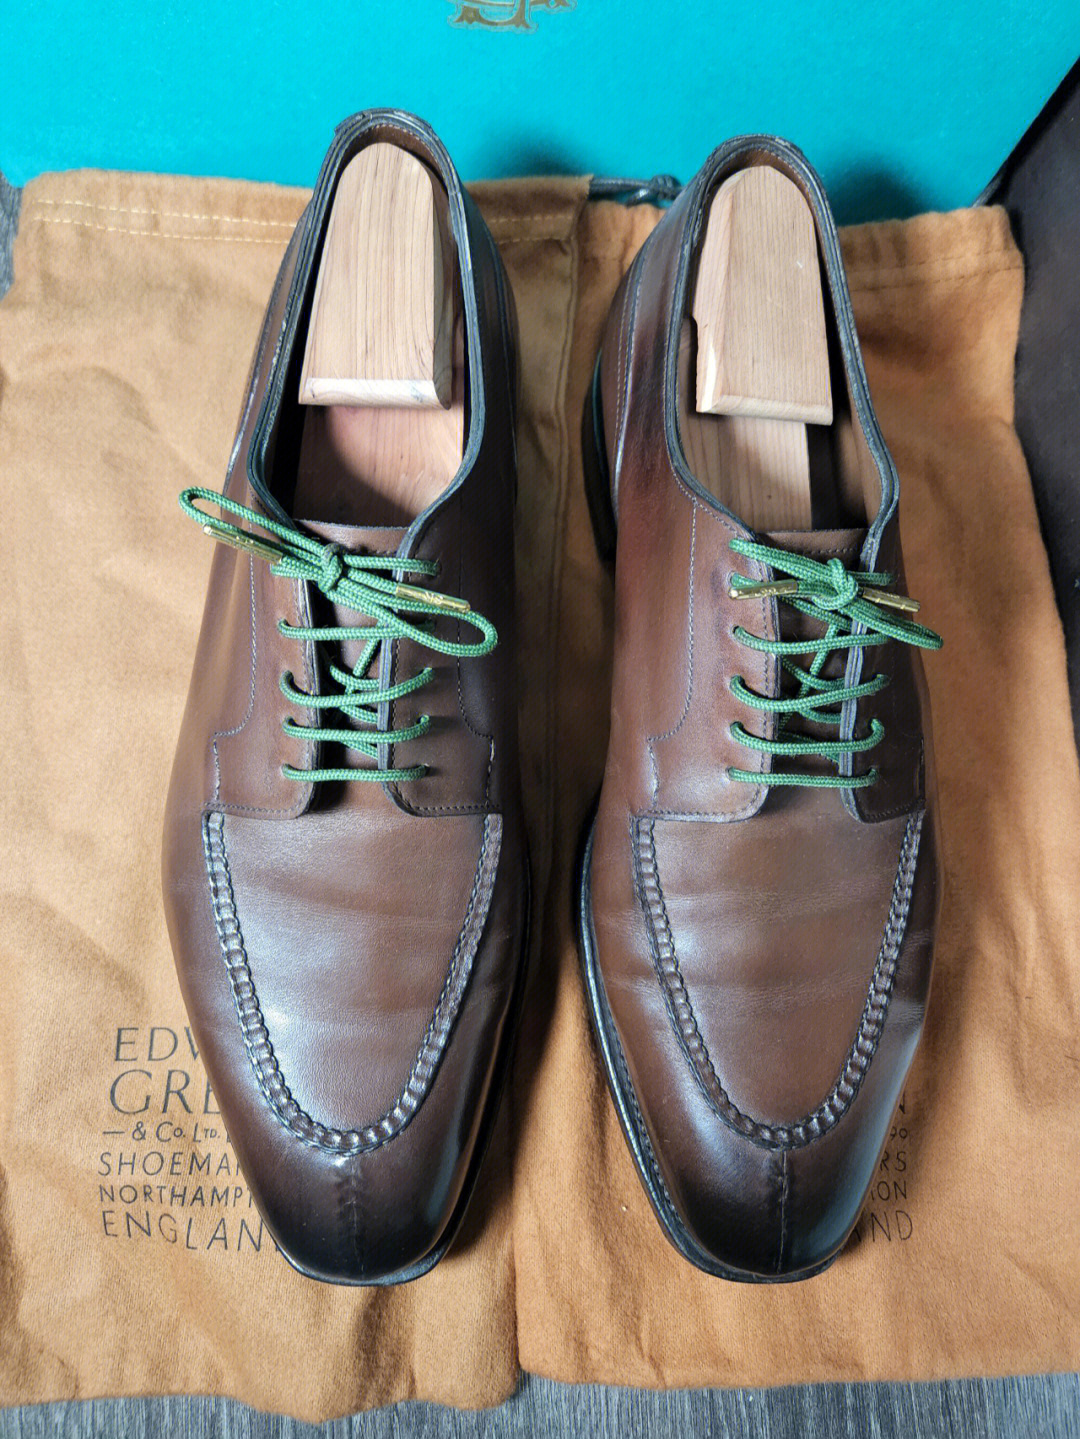 green shoe provision图片